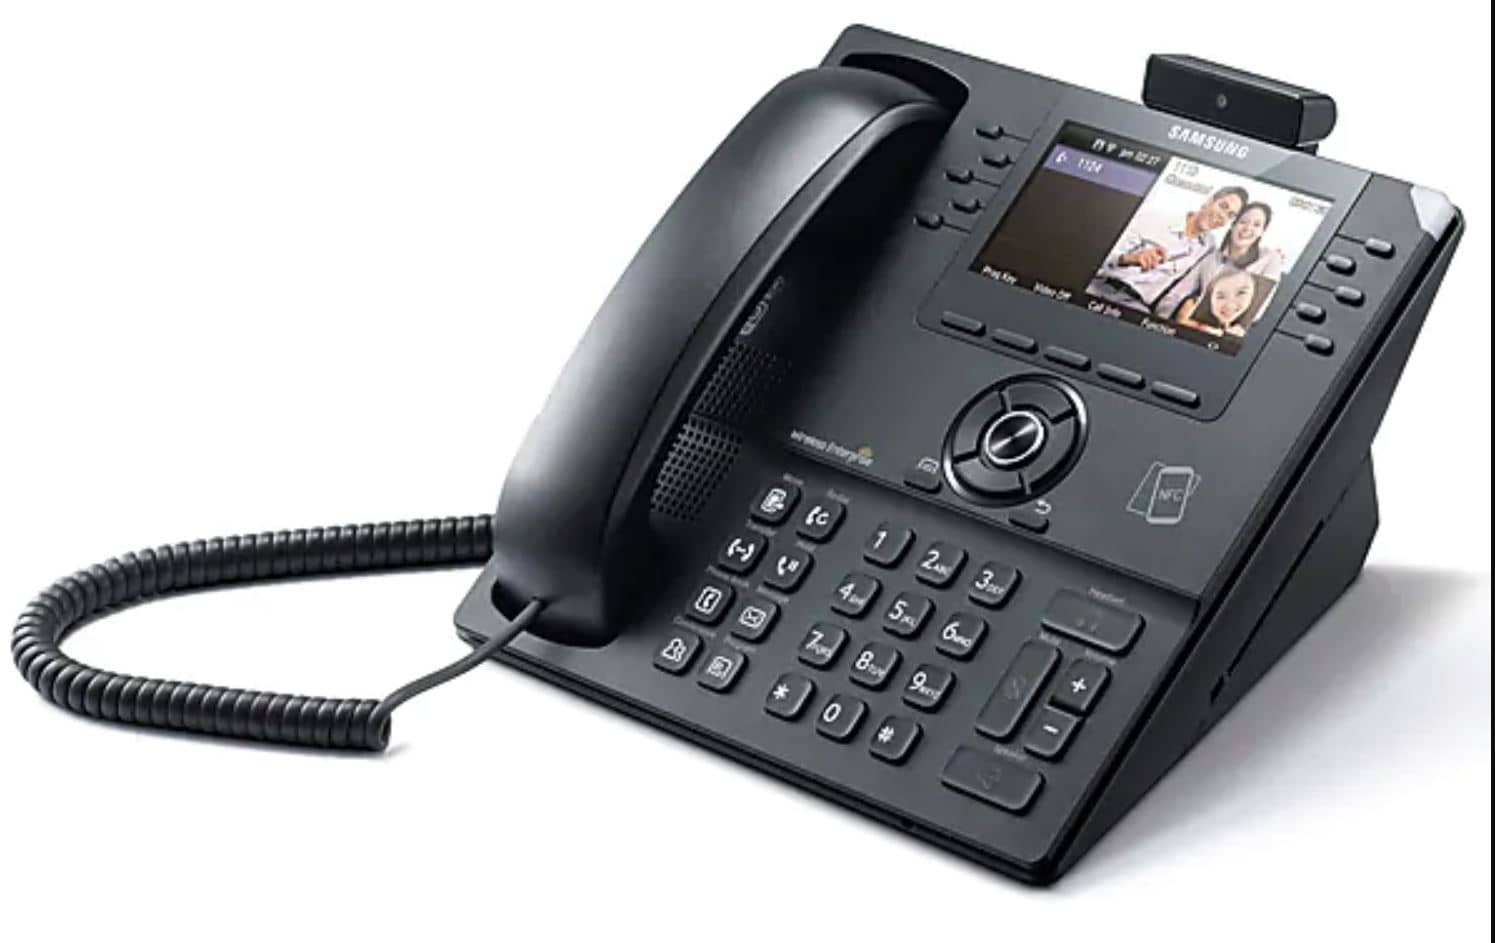 Samsung SMT-i5343 IP Phone Image